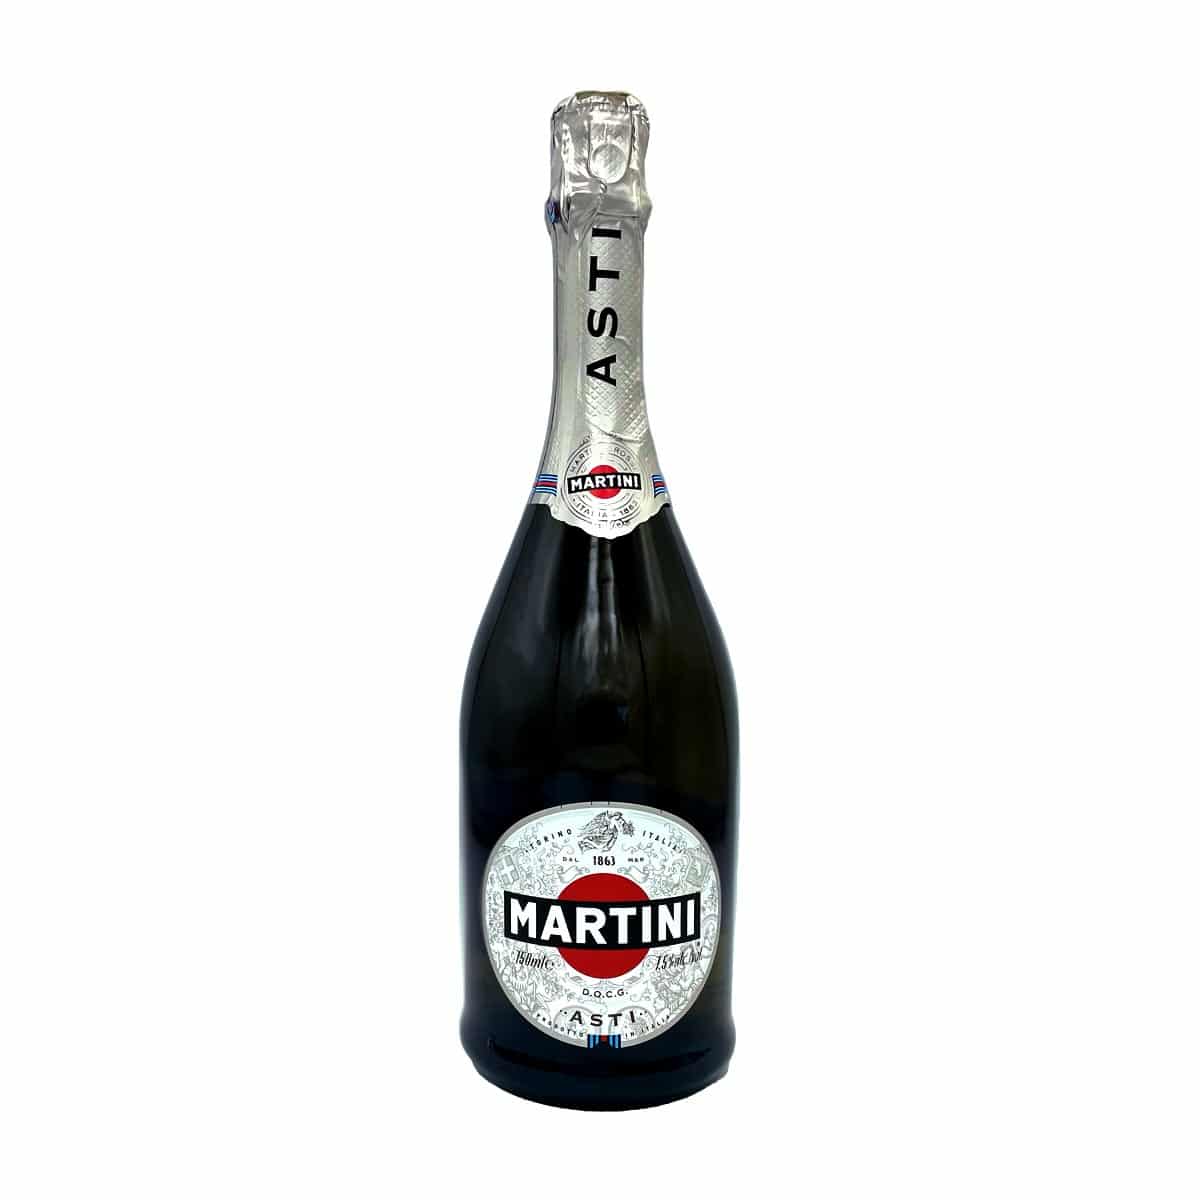 Martini-Asti-Docg-Spumante-vorne